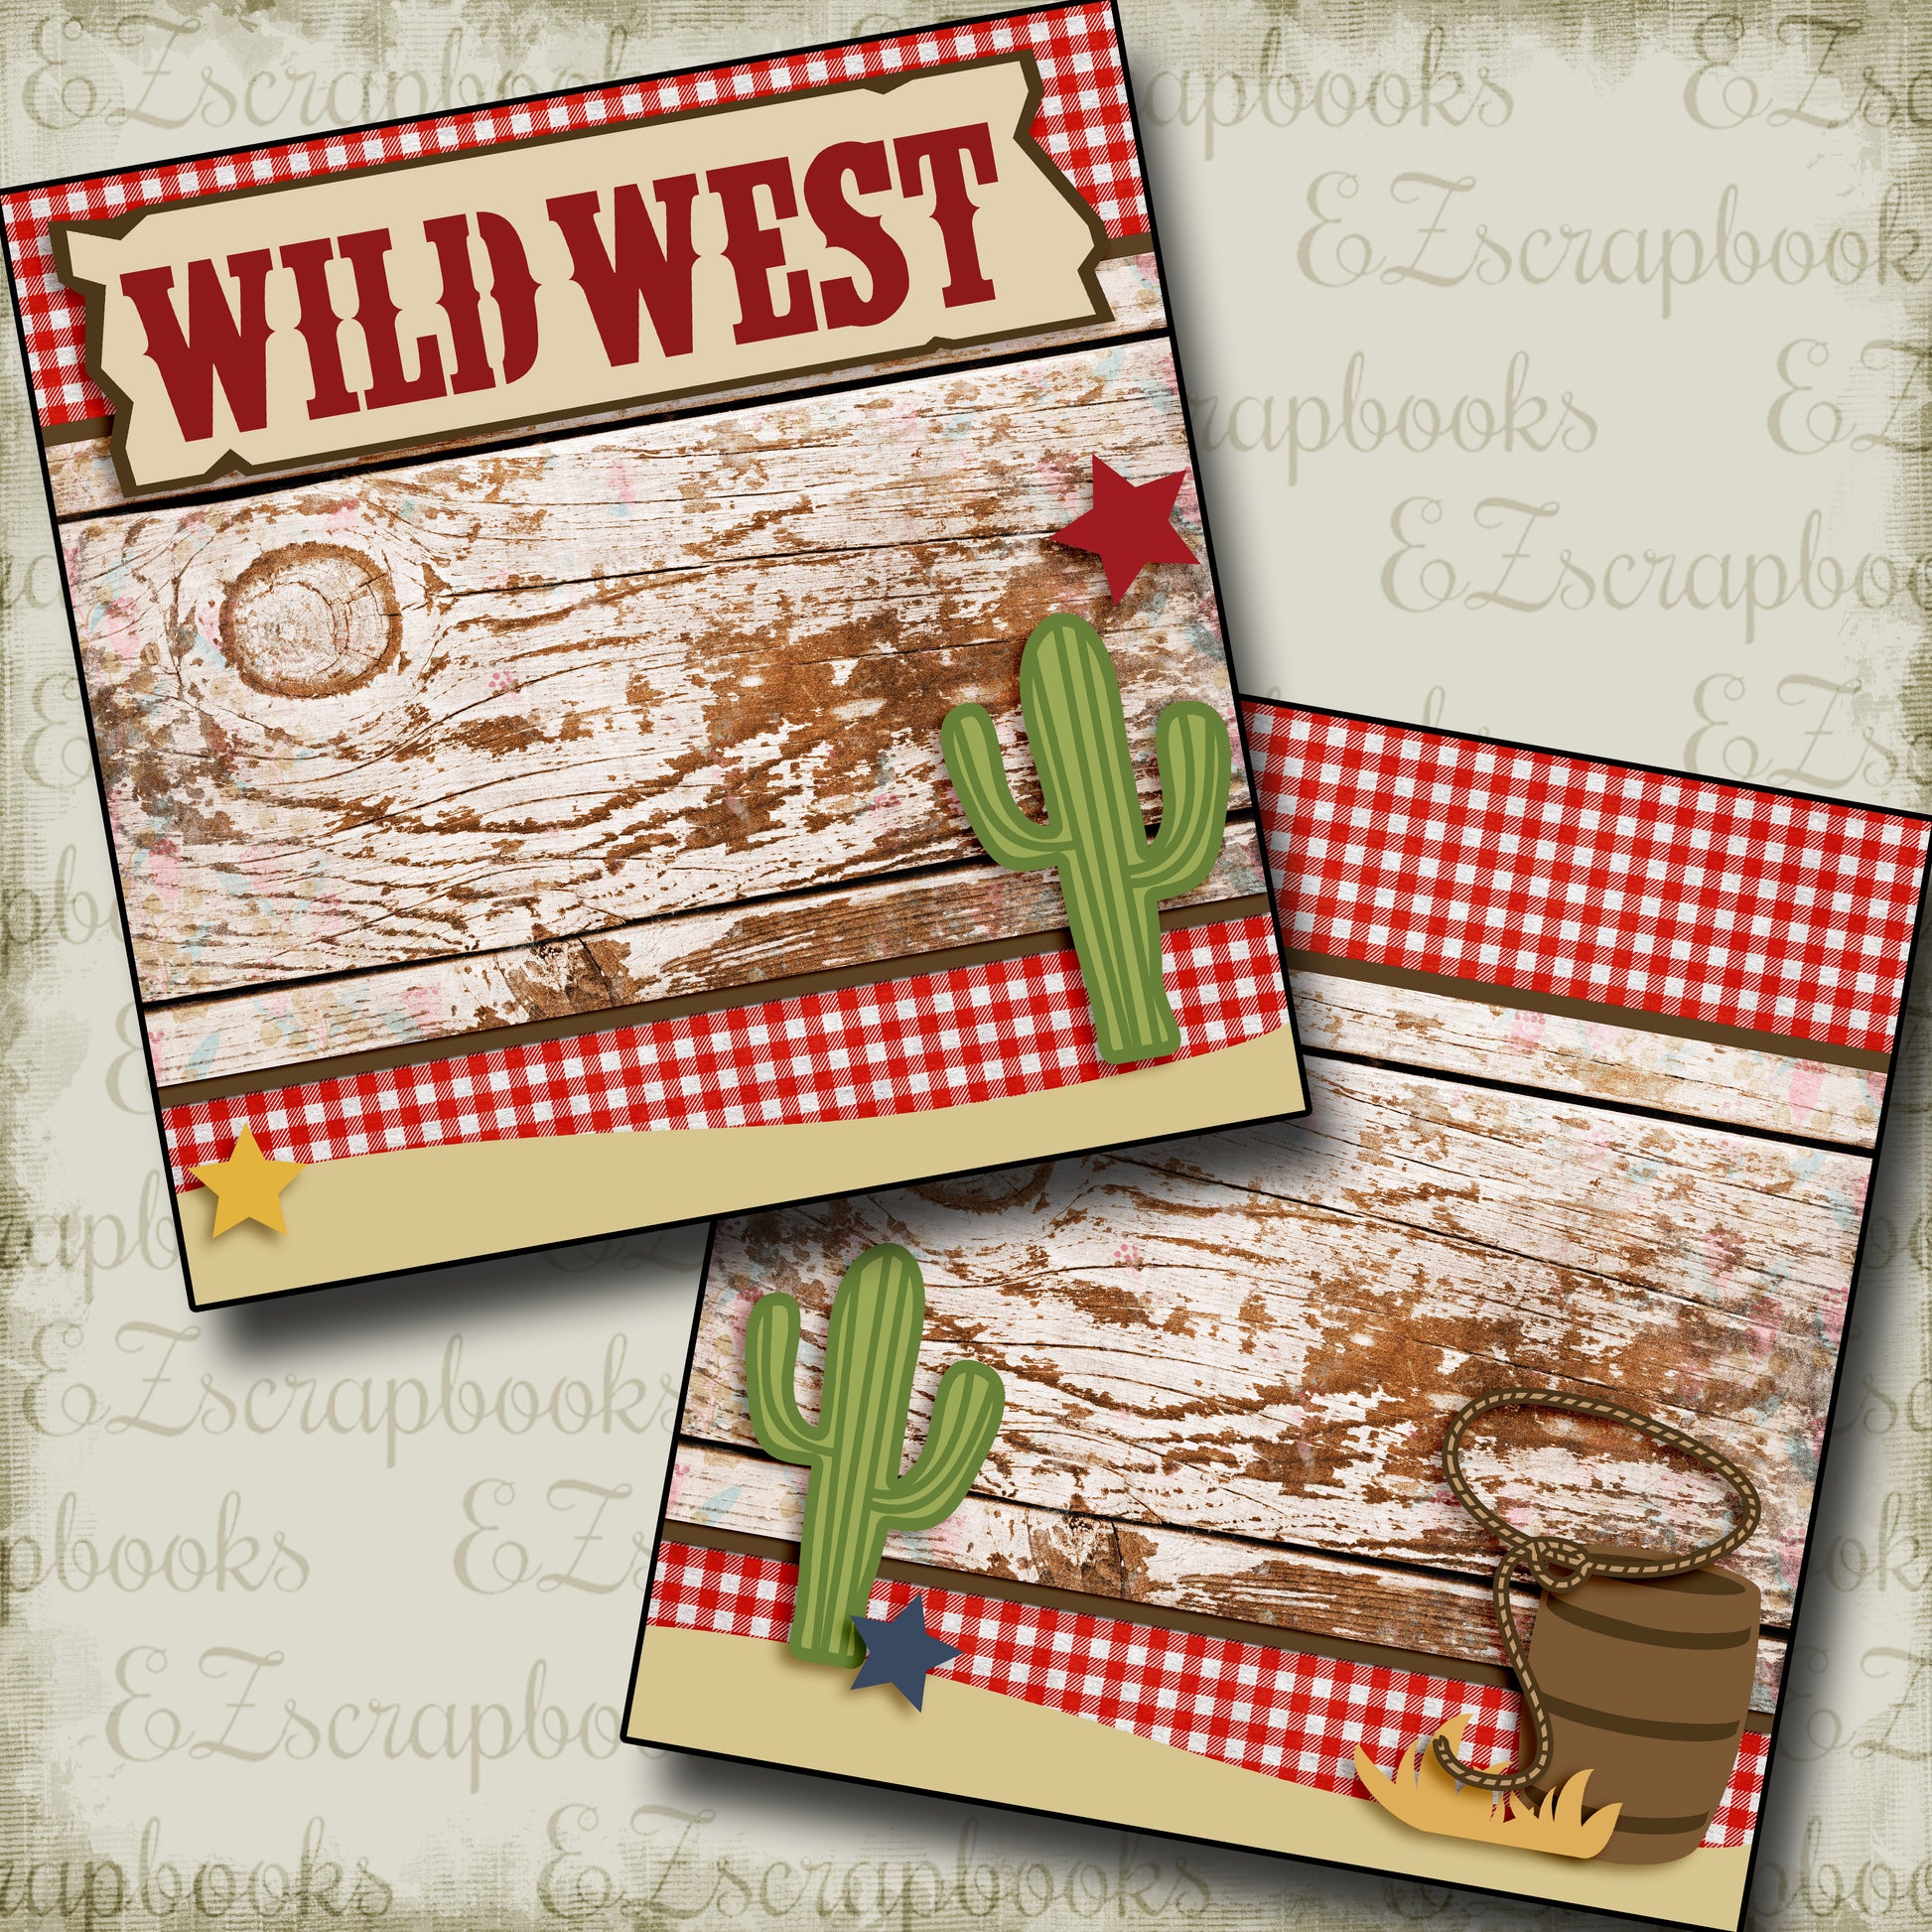 Wild West NPM - 2551 - EZscrapbooks Scrapbook Layouts Western - Cowboy